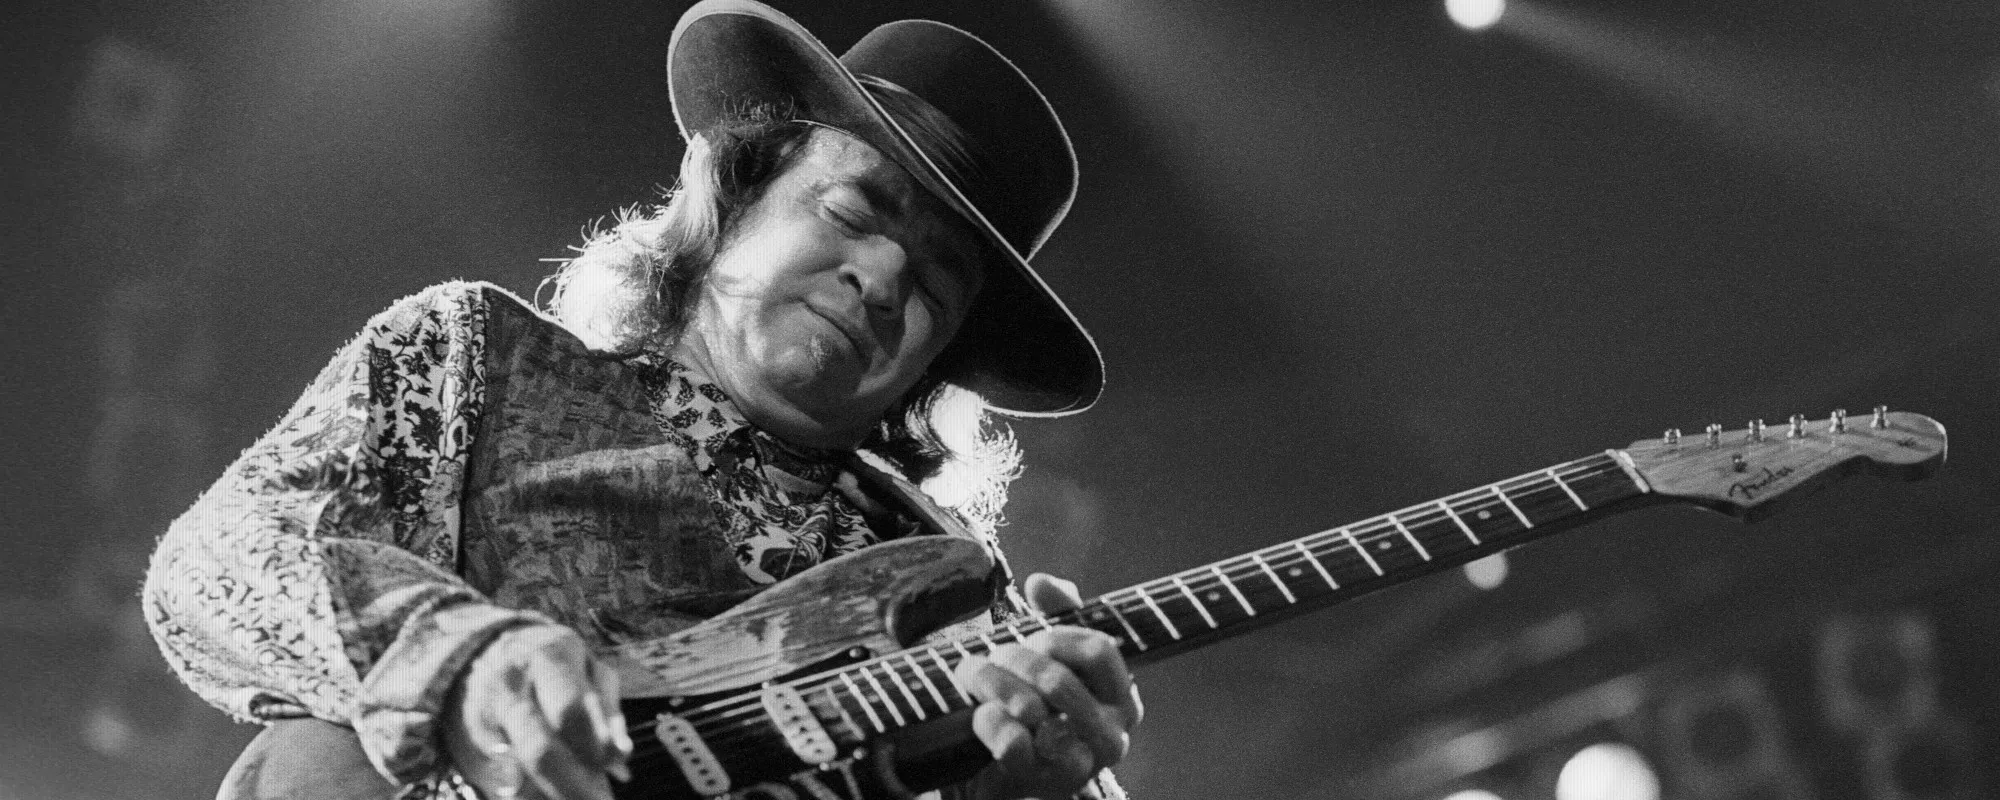 Meet the Blues Singer Behind Stevie Ray Vaughan’s “Texas Flood”